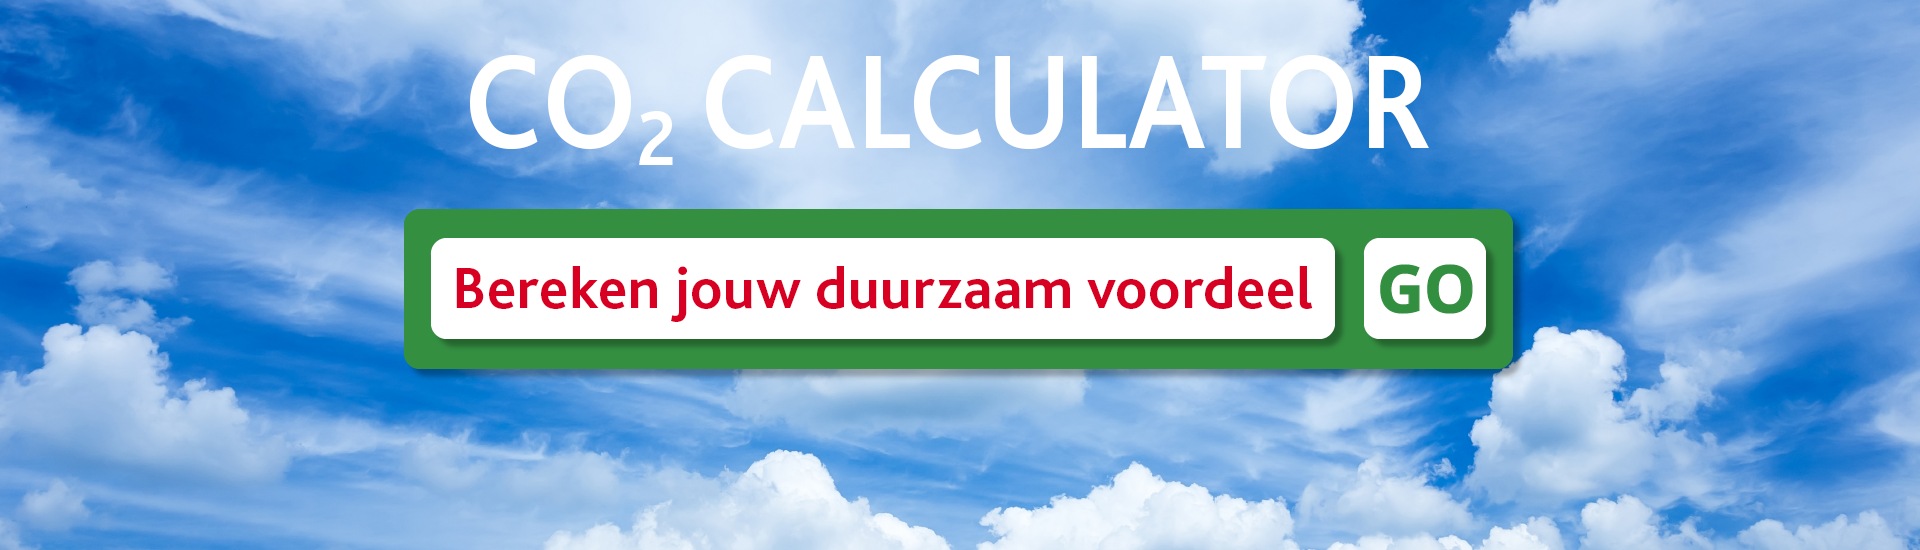 NL_Calculator_header_1920x550px.png